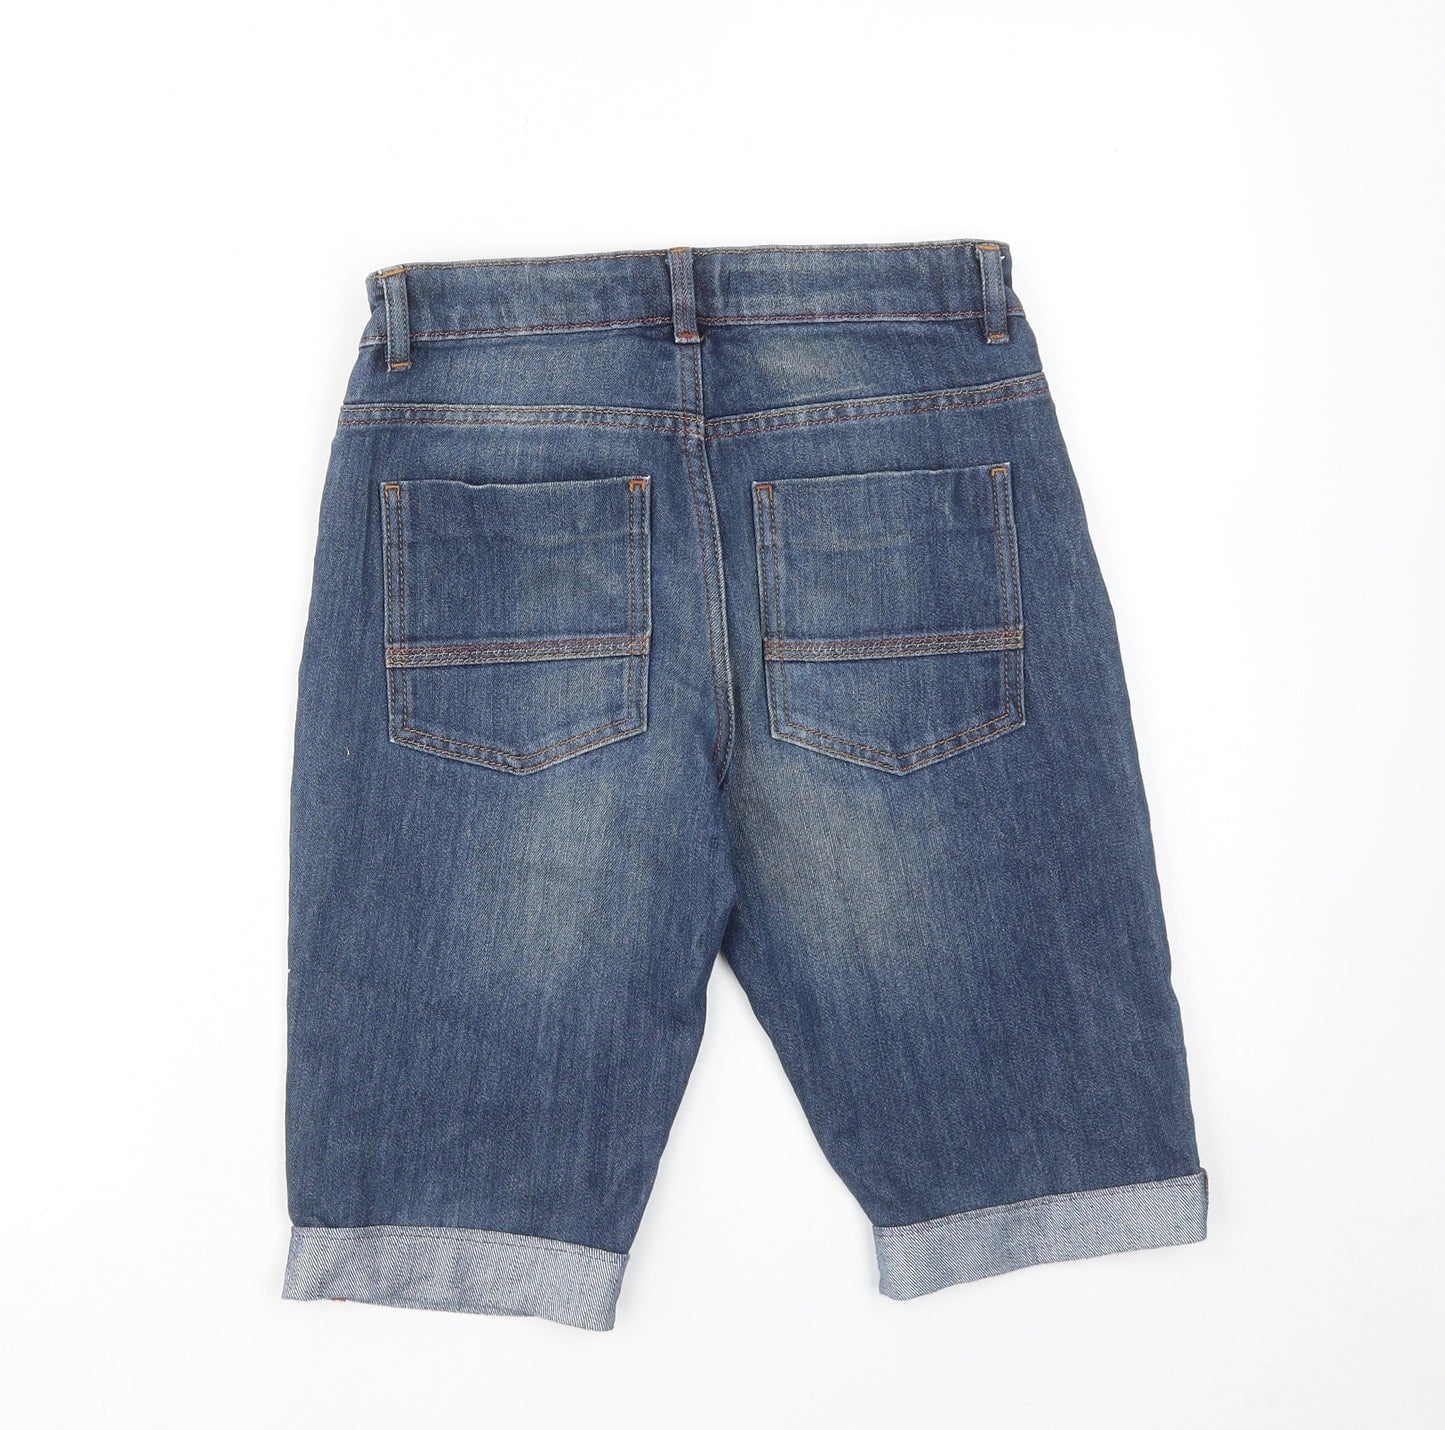 NEXT Boys Blue Cotton Chino Shorts Size 13 Years Regular Zip - Skinny